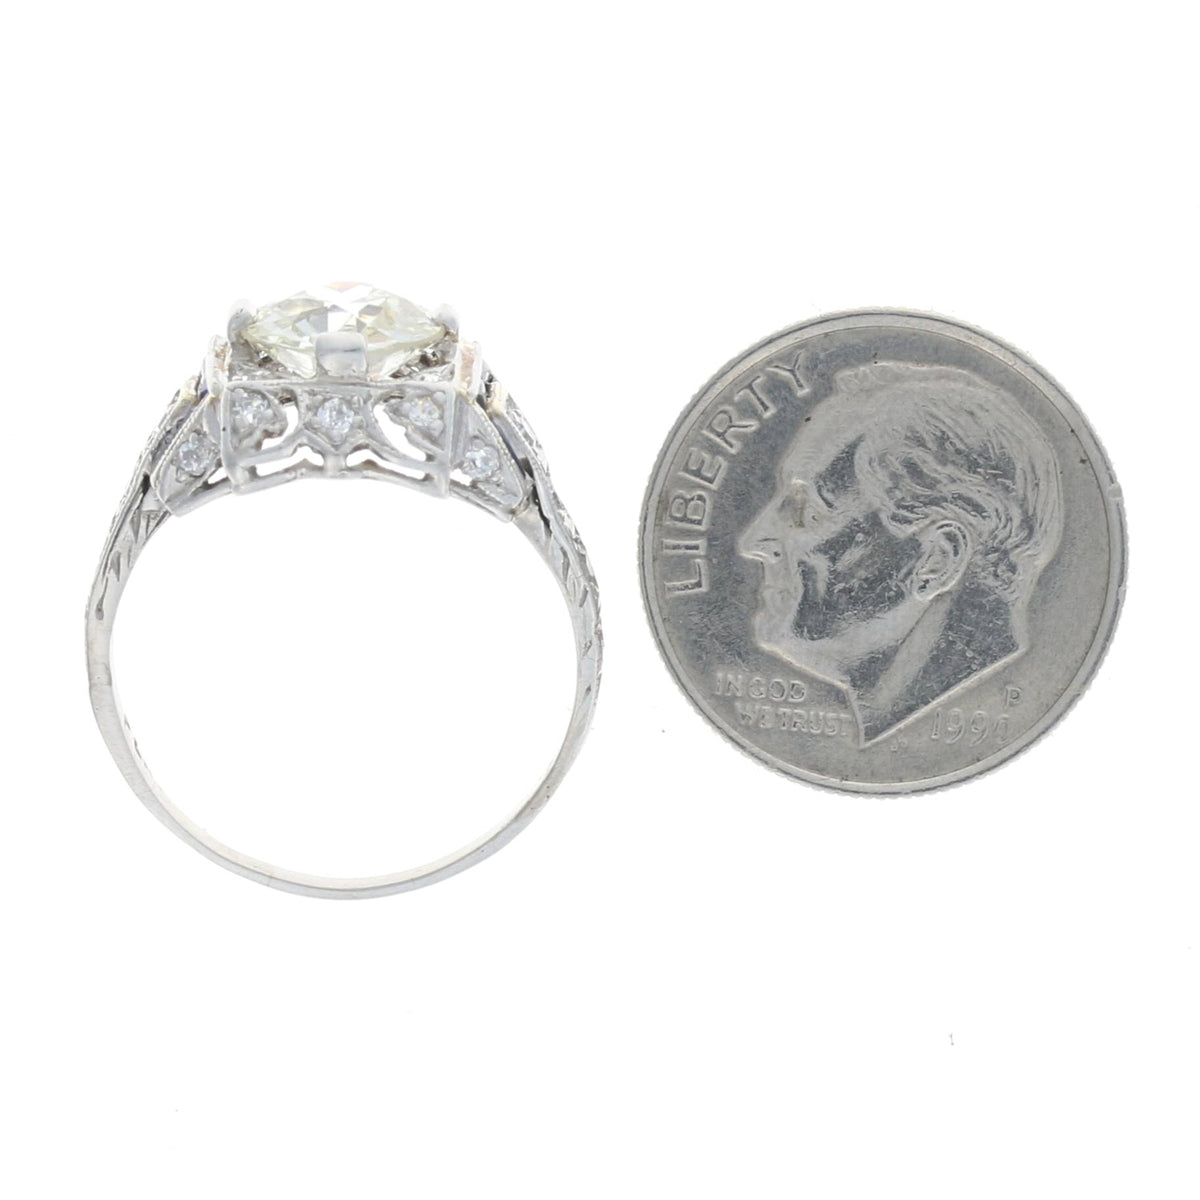 1.34ct Art Deco Diamond & Synthetic Sapphire Ring Platinum